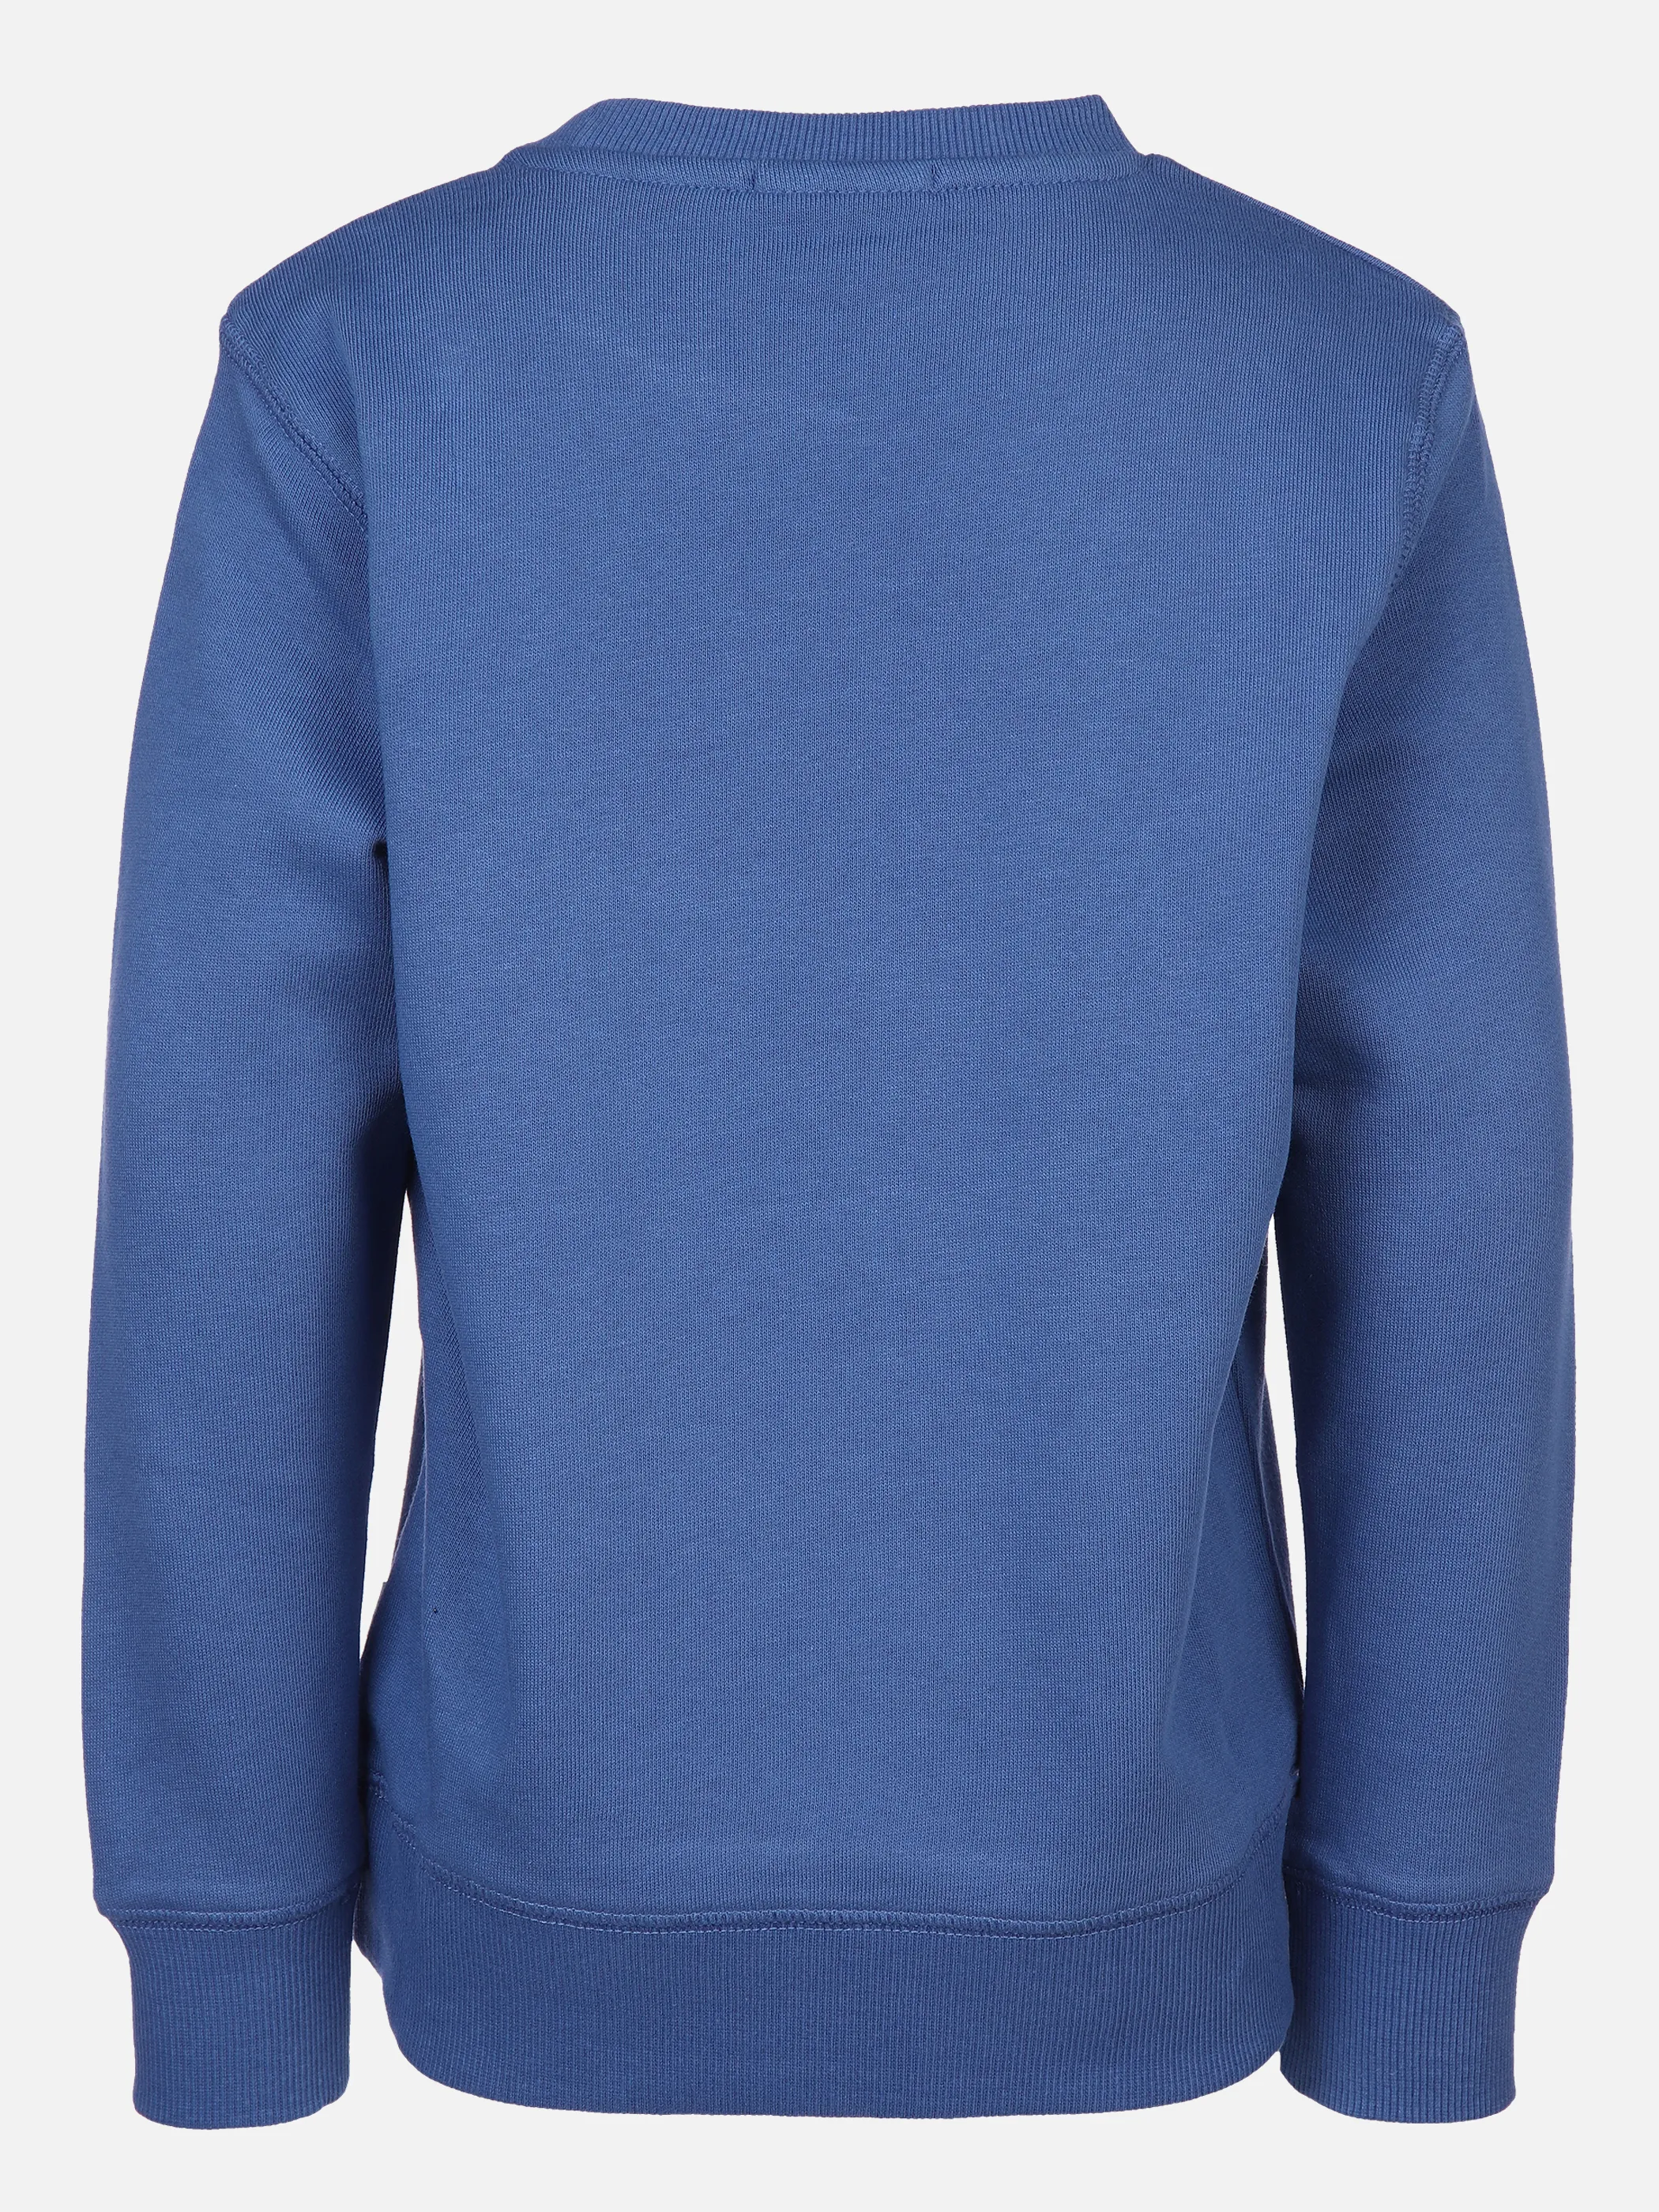 Tom Tailor 1030576 printed sweatshirt Blau 860535 10344 2